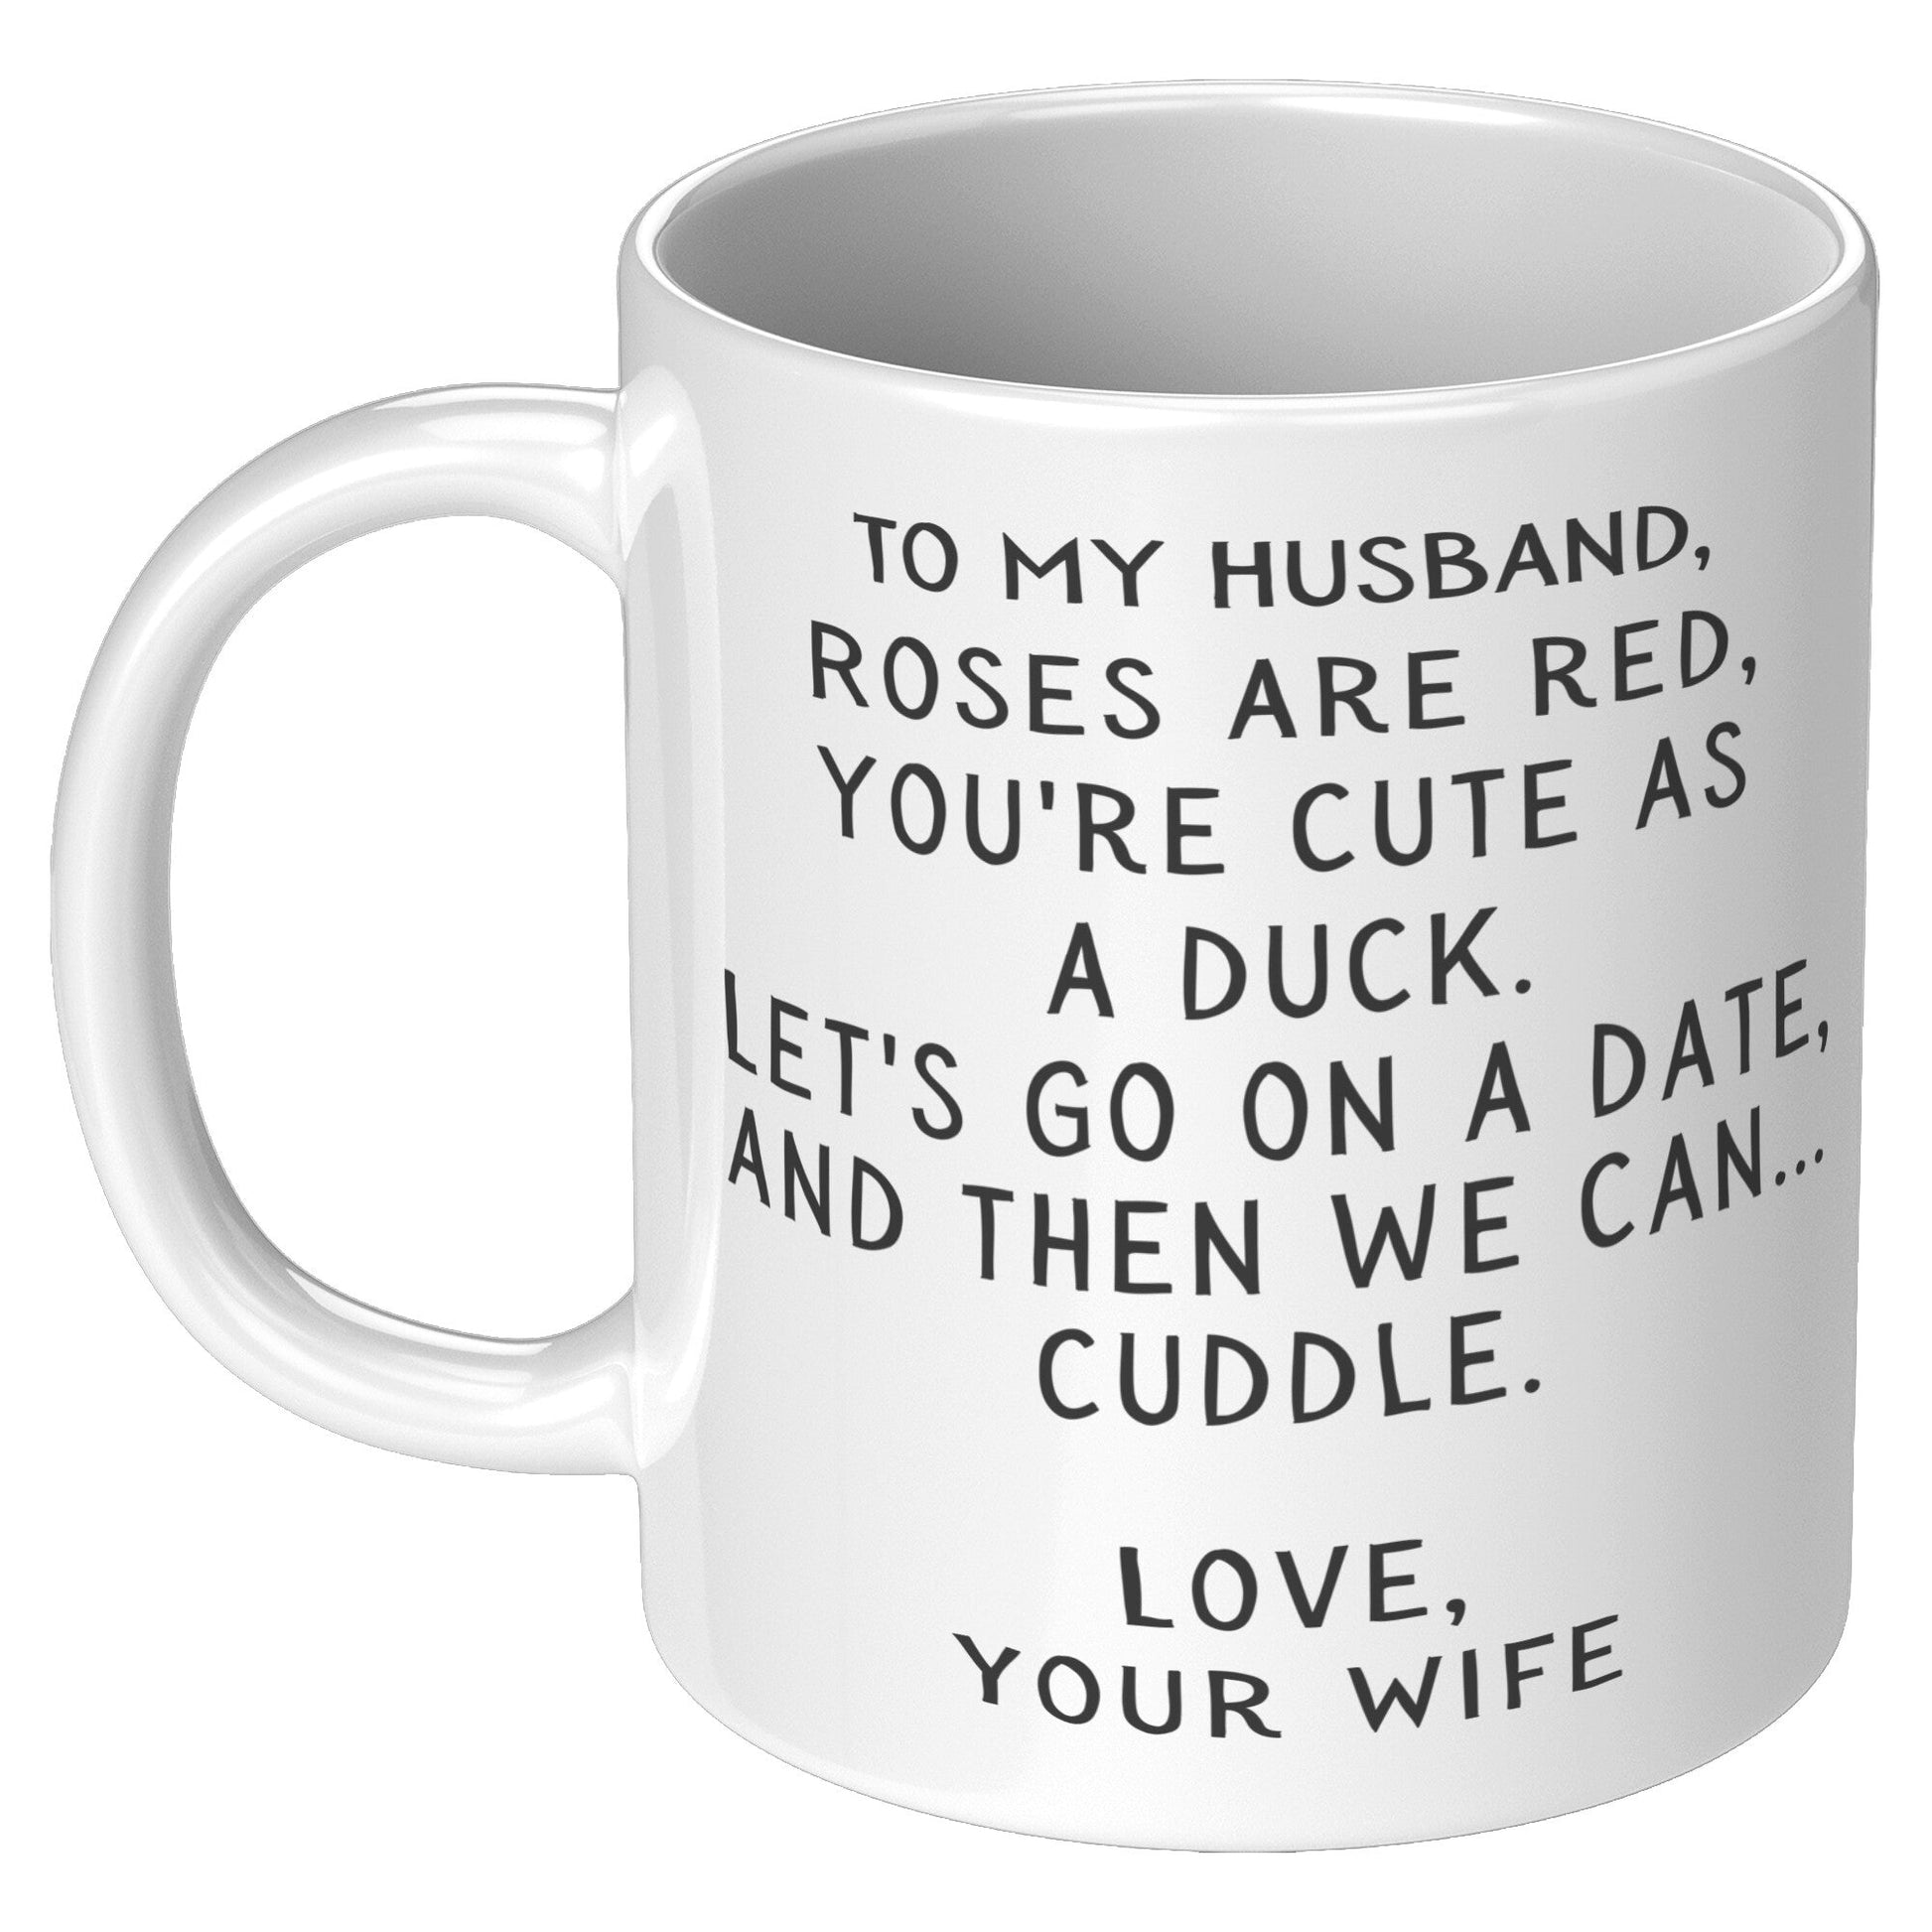 Funny Gift for Husband "Cute As A Duck" Mug Ceramic Mugs 11oz White Mug 